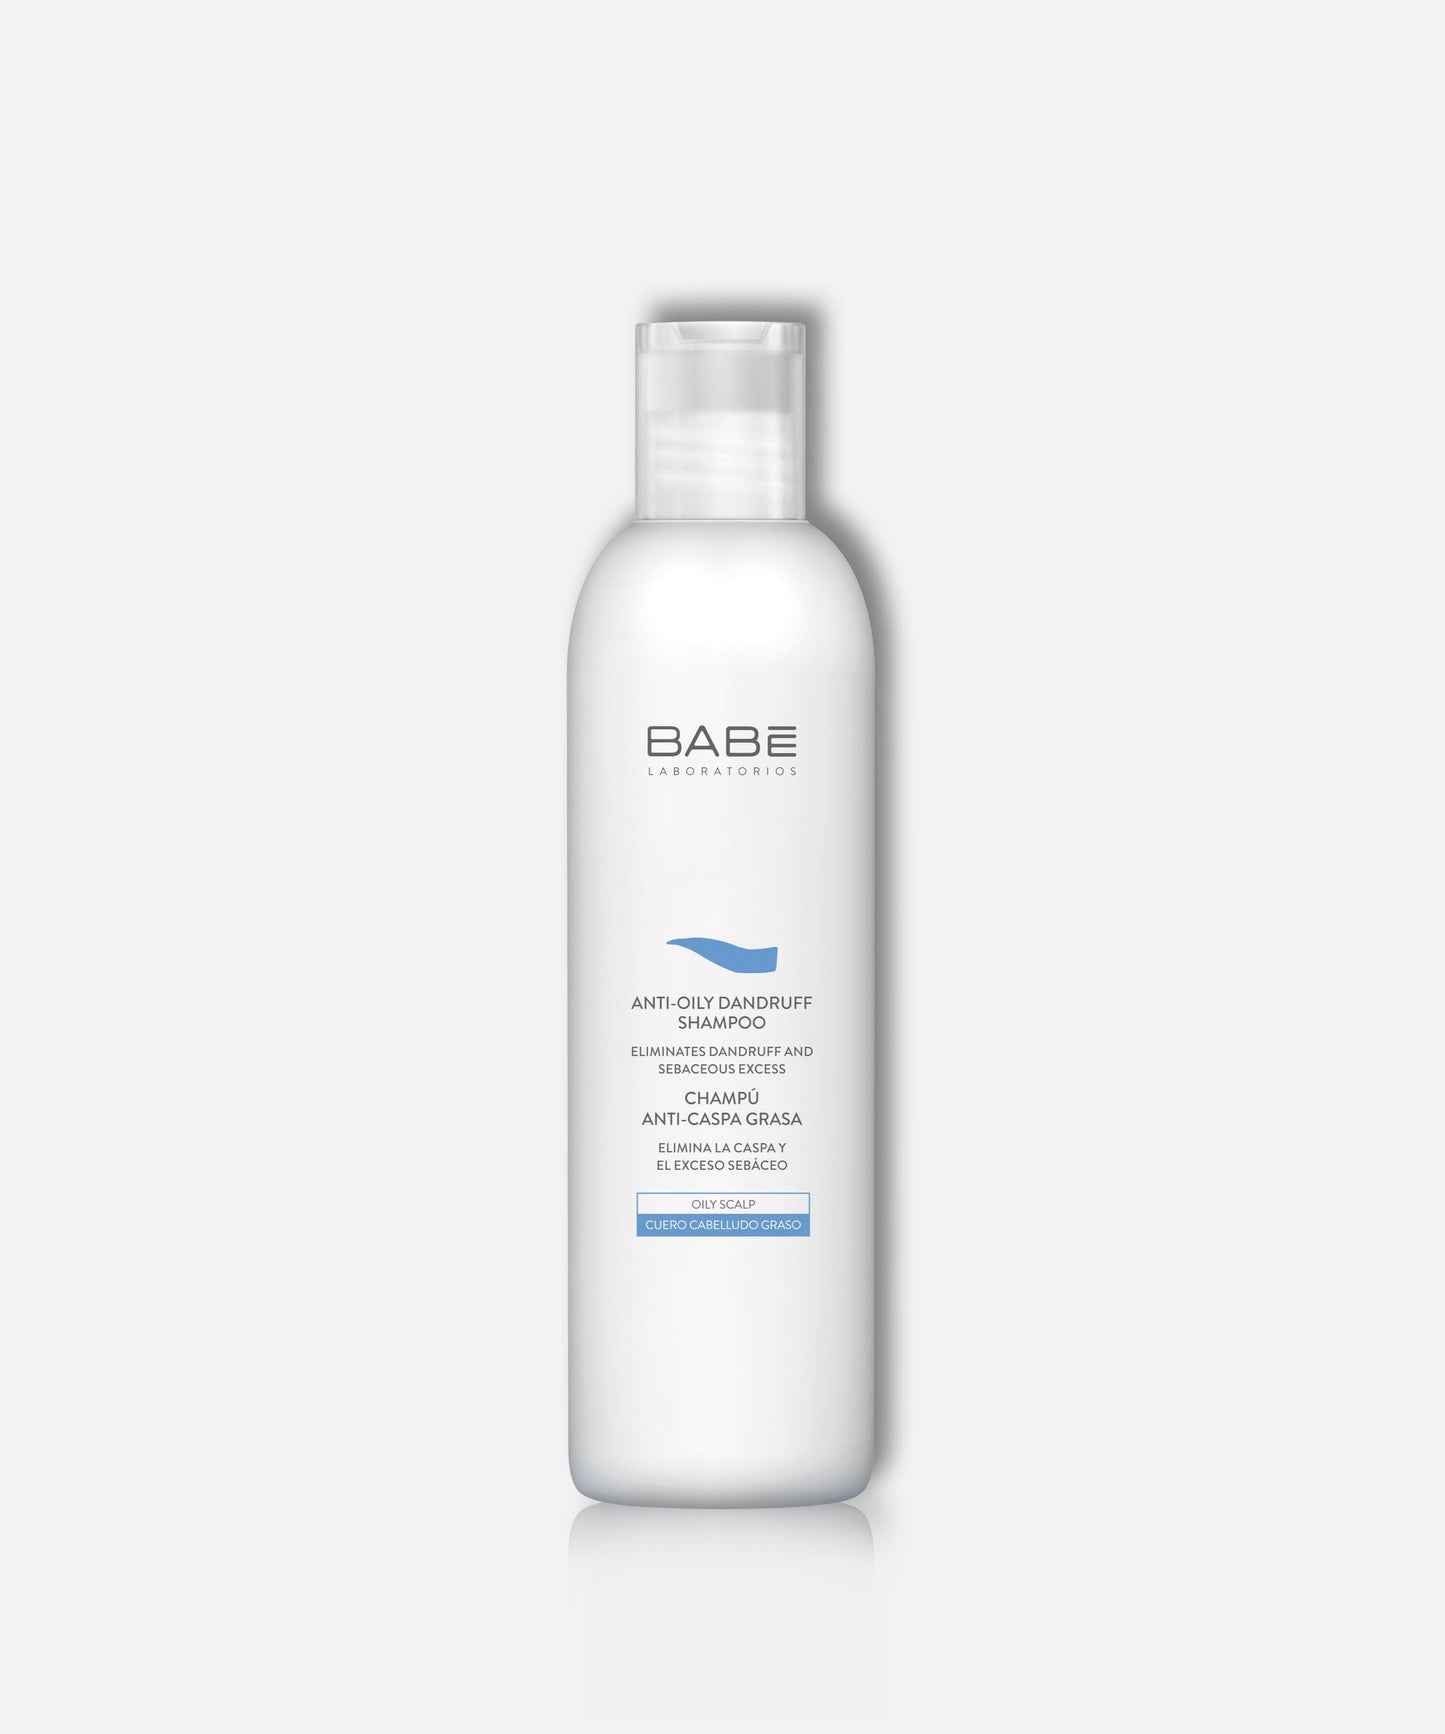 BABÉ Anti-Oily Dandruff Shampoo for Oily Scalps